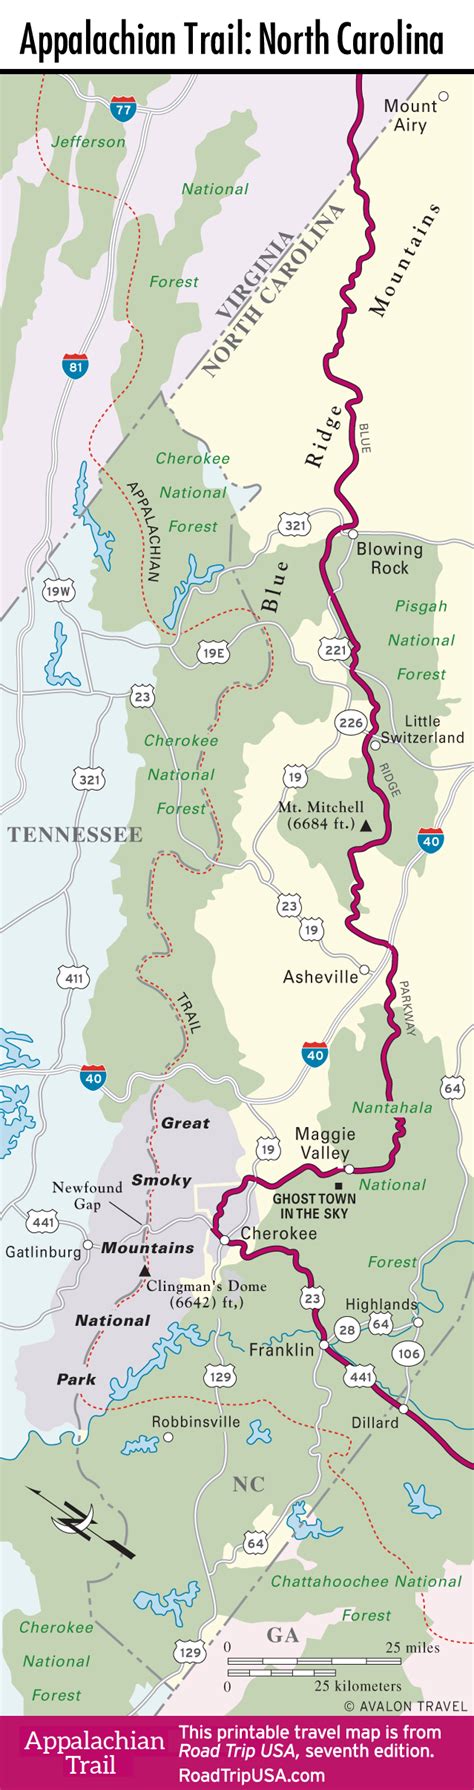 The Appalachian Trail In North Carolina Road Trip Usa